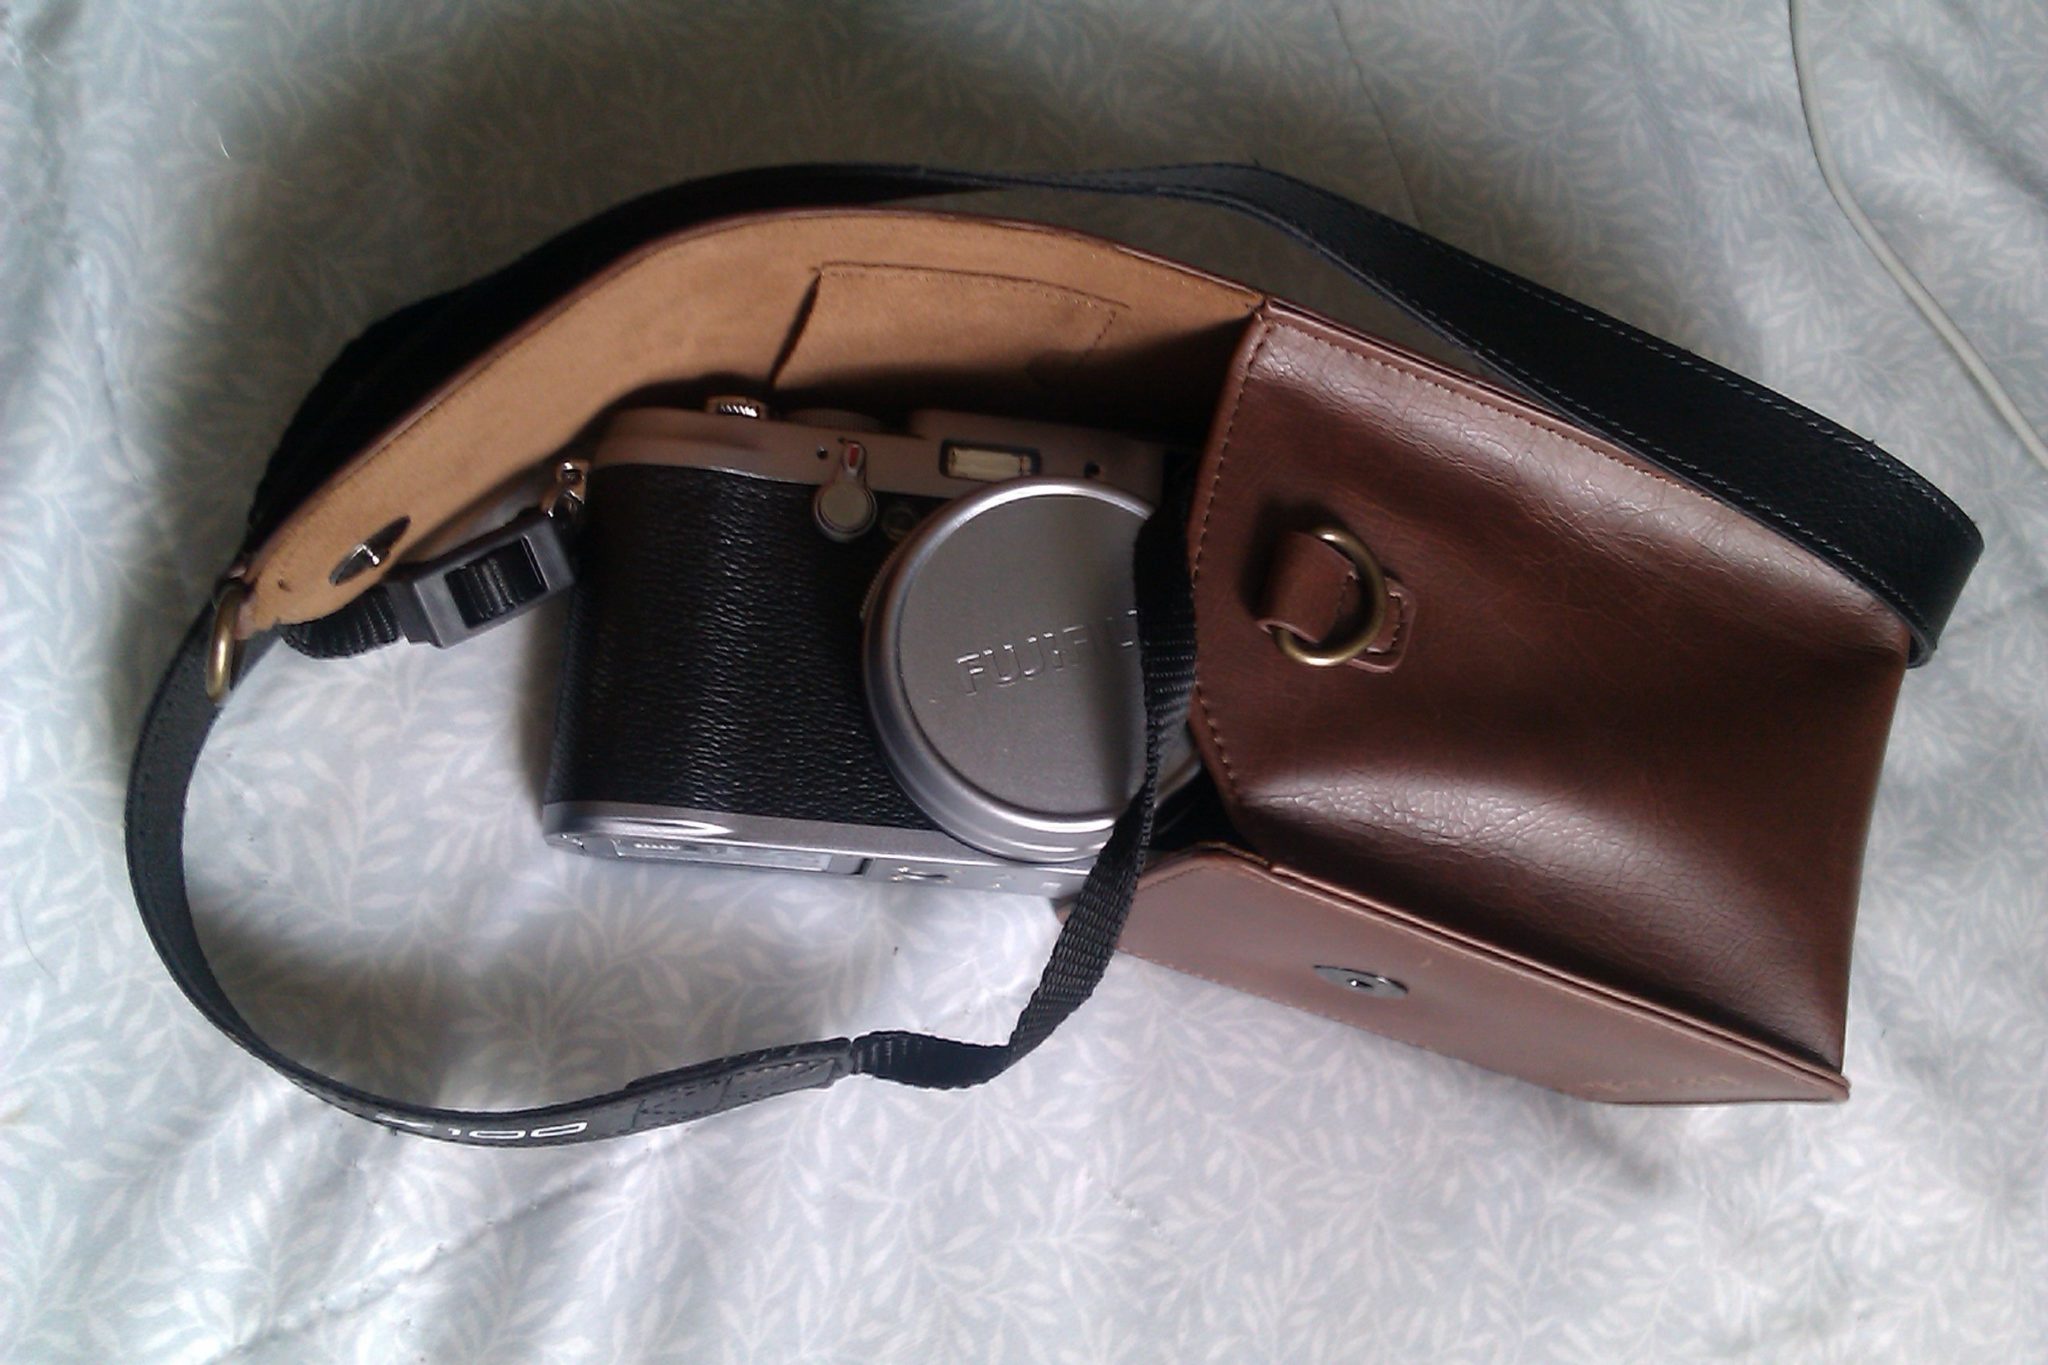 Fuji x100 leather case